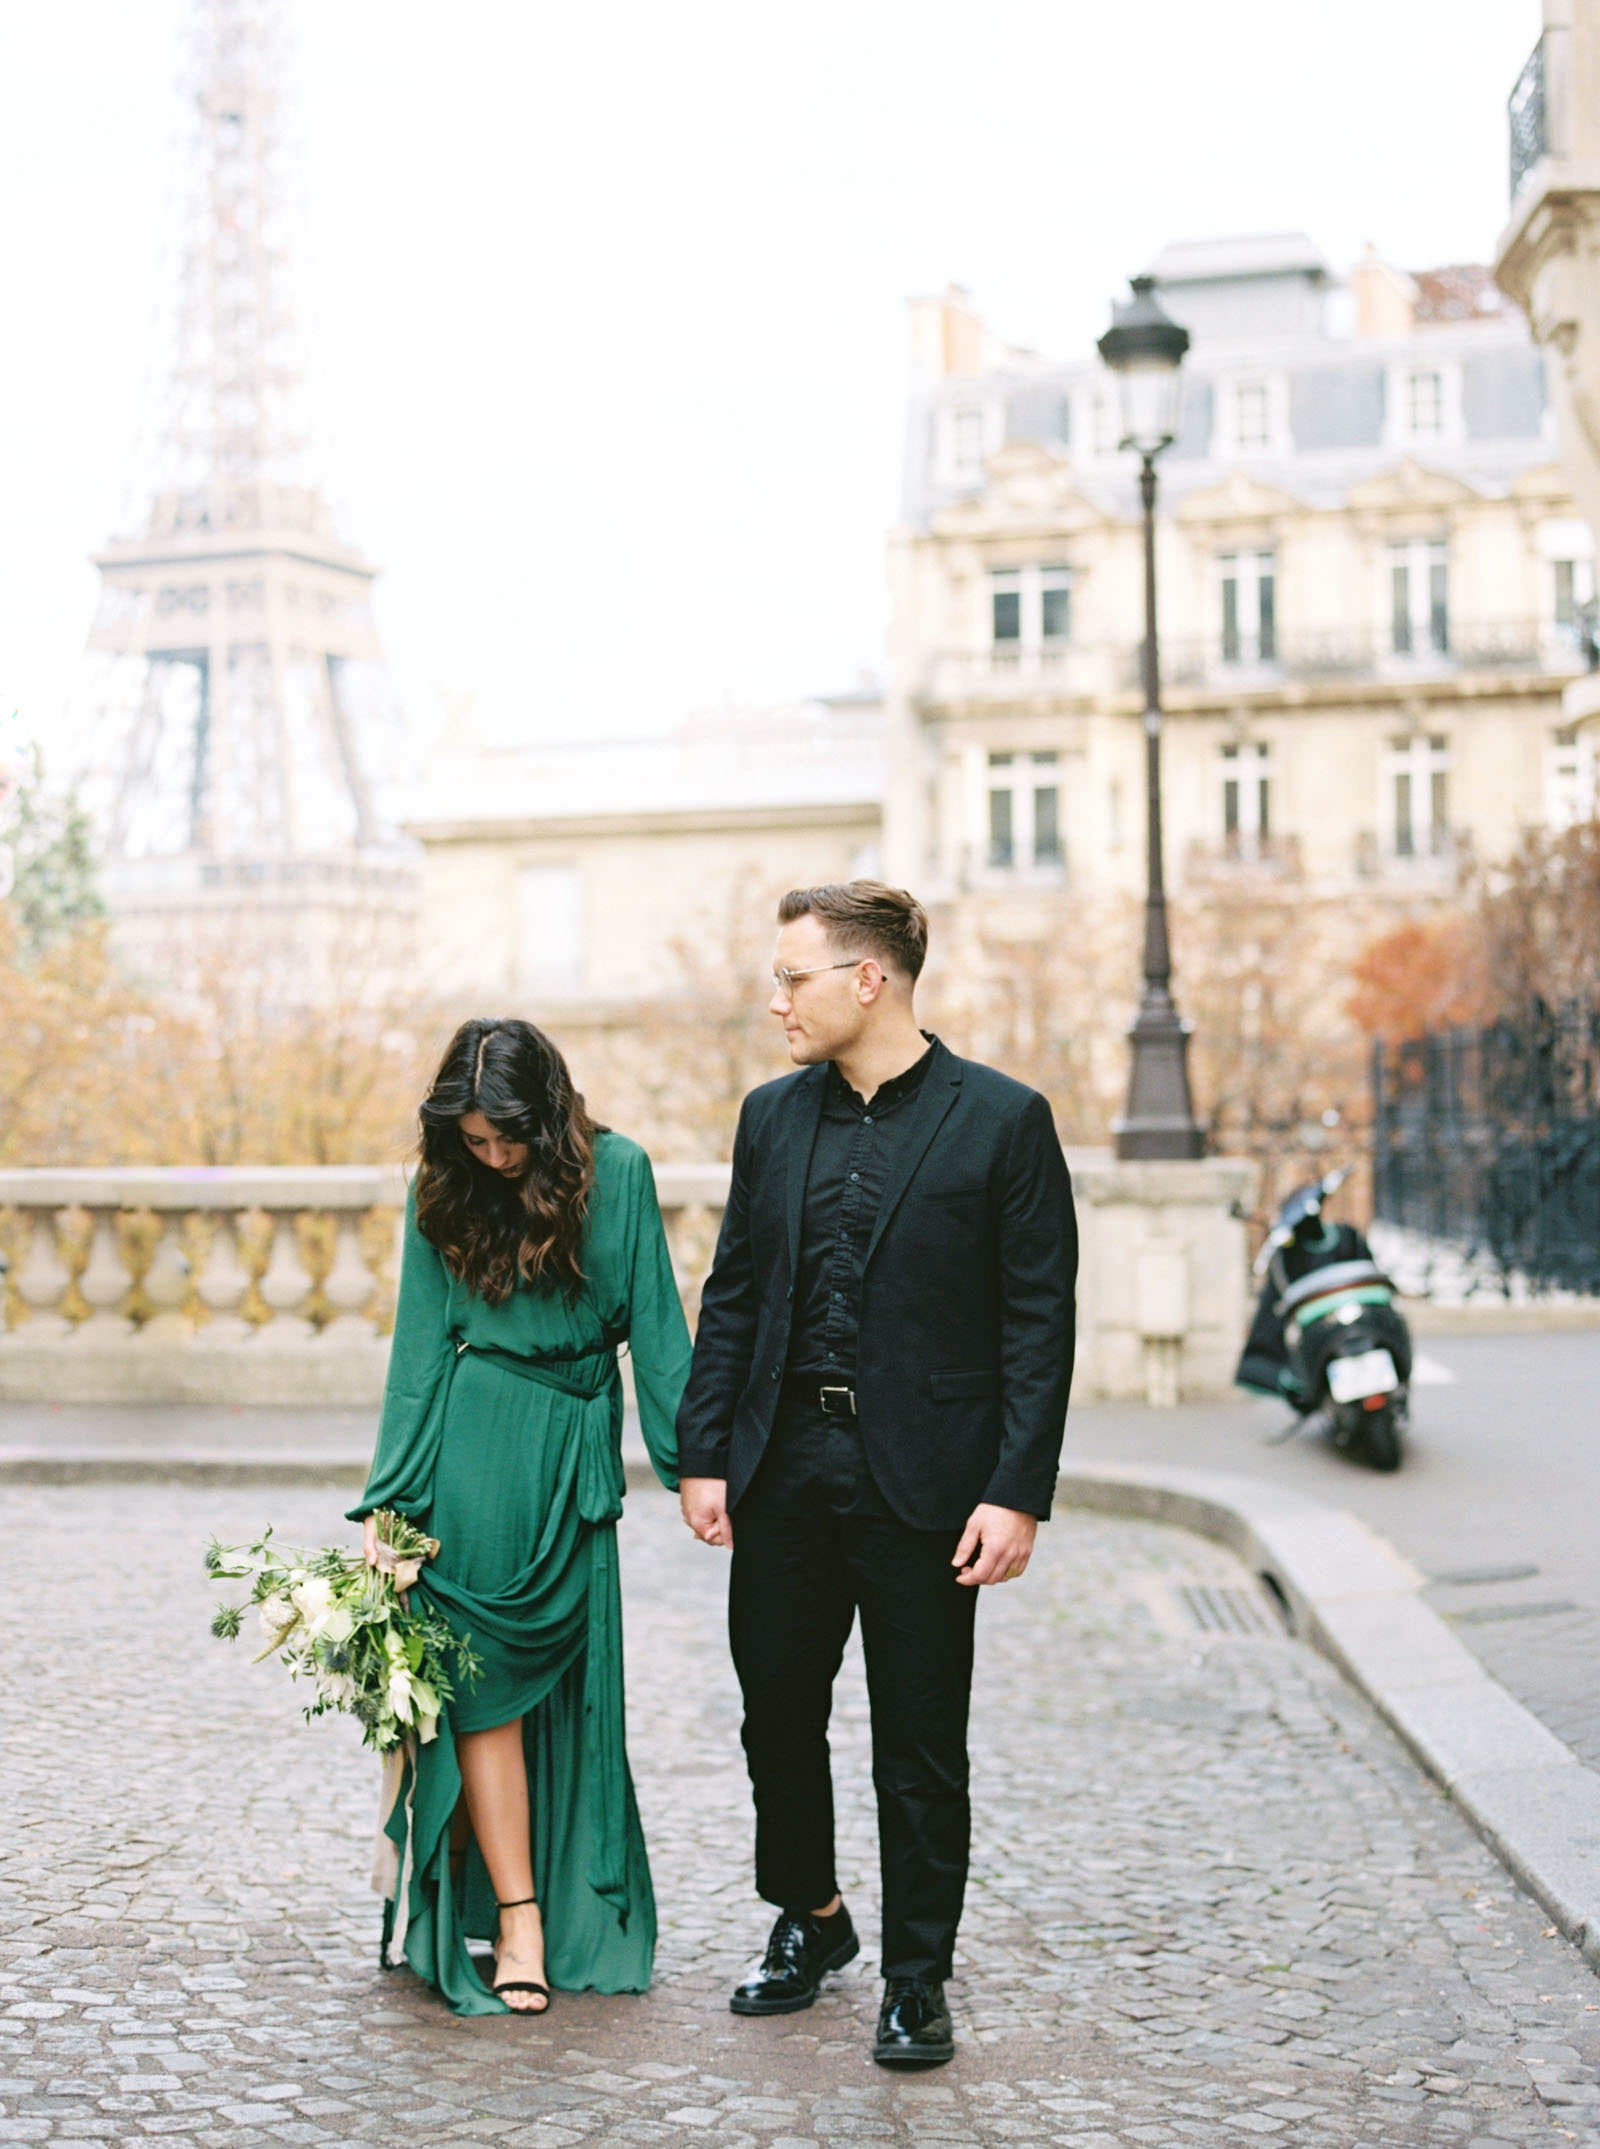 Romantic Engagement Photos - Eiffel Tower - KR Moreno